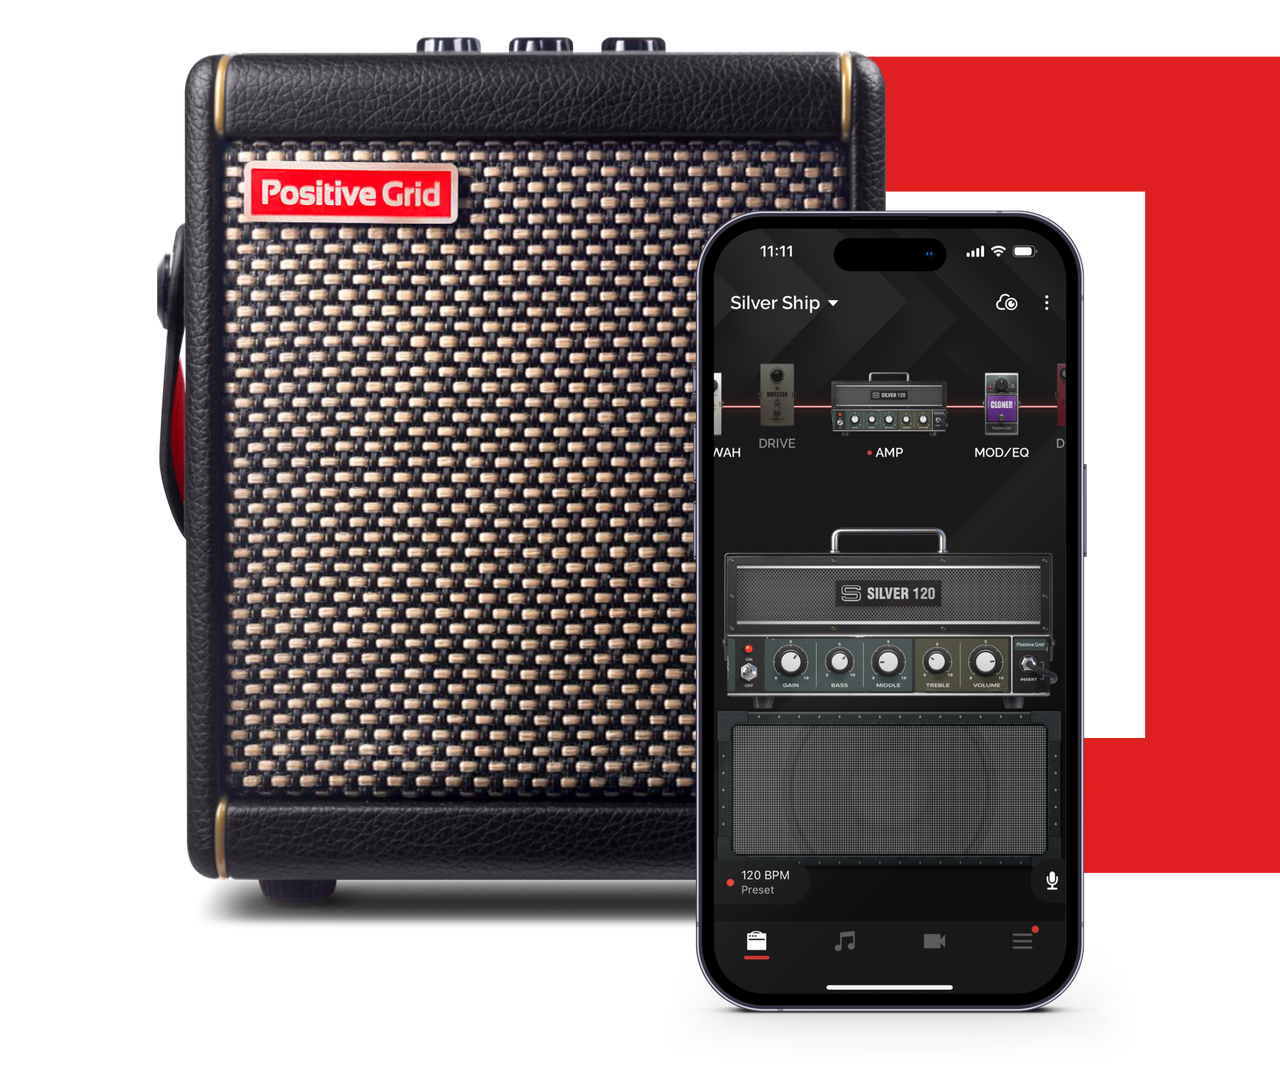 Positive Grid Spark GO Ultra-portable Smart Guitar Amp and Bluetooth  Speaker